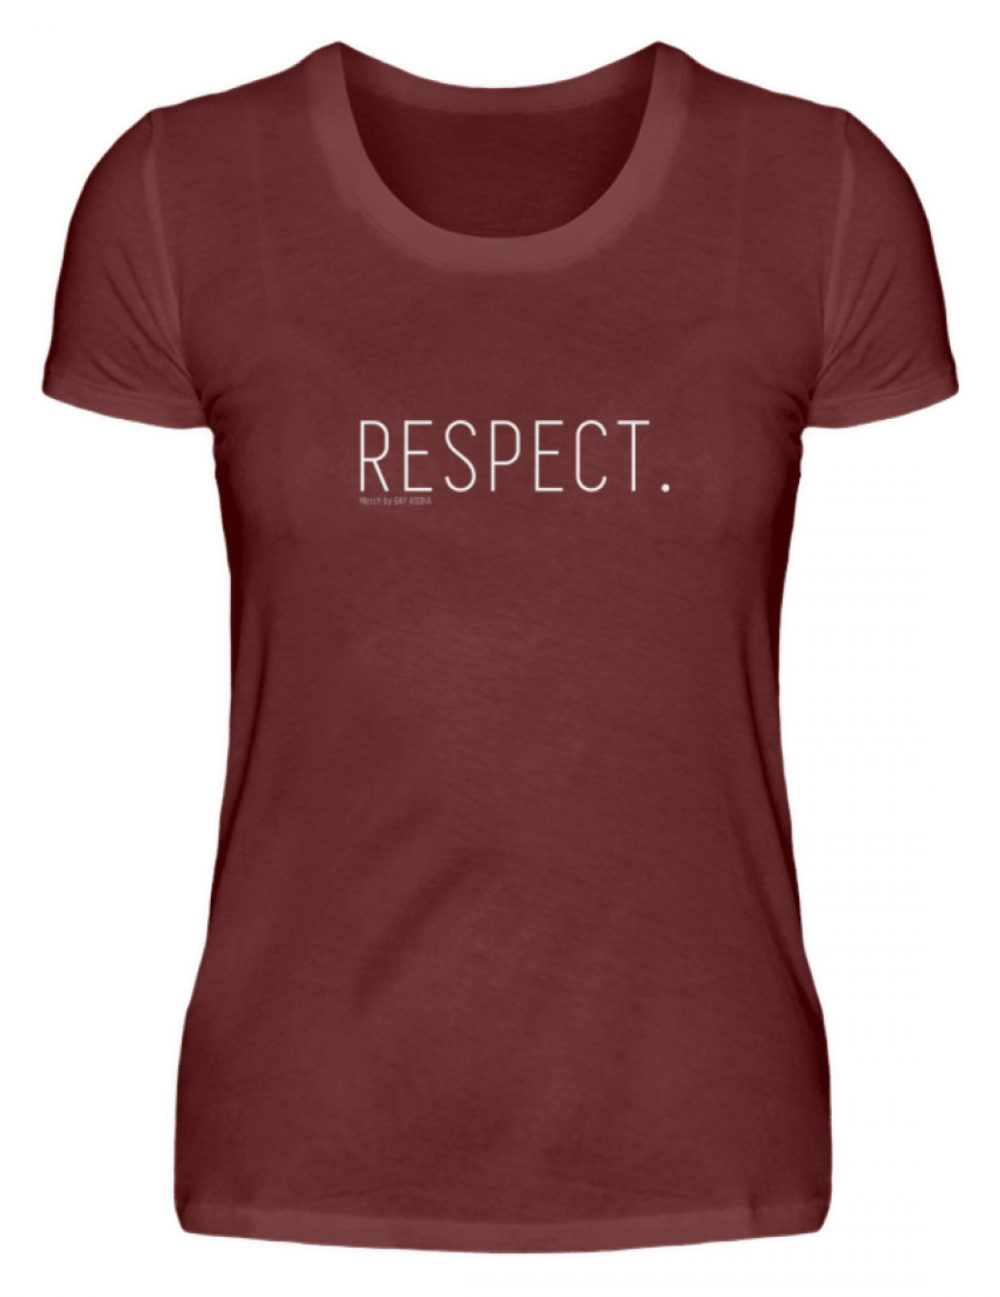 RESPECT. - Damen Premiumshirt-3192